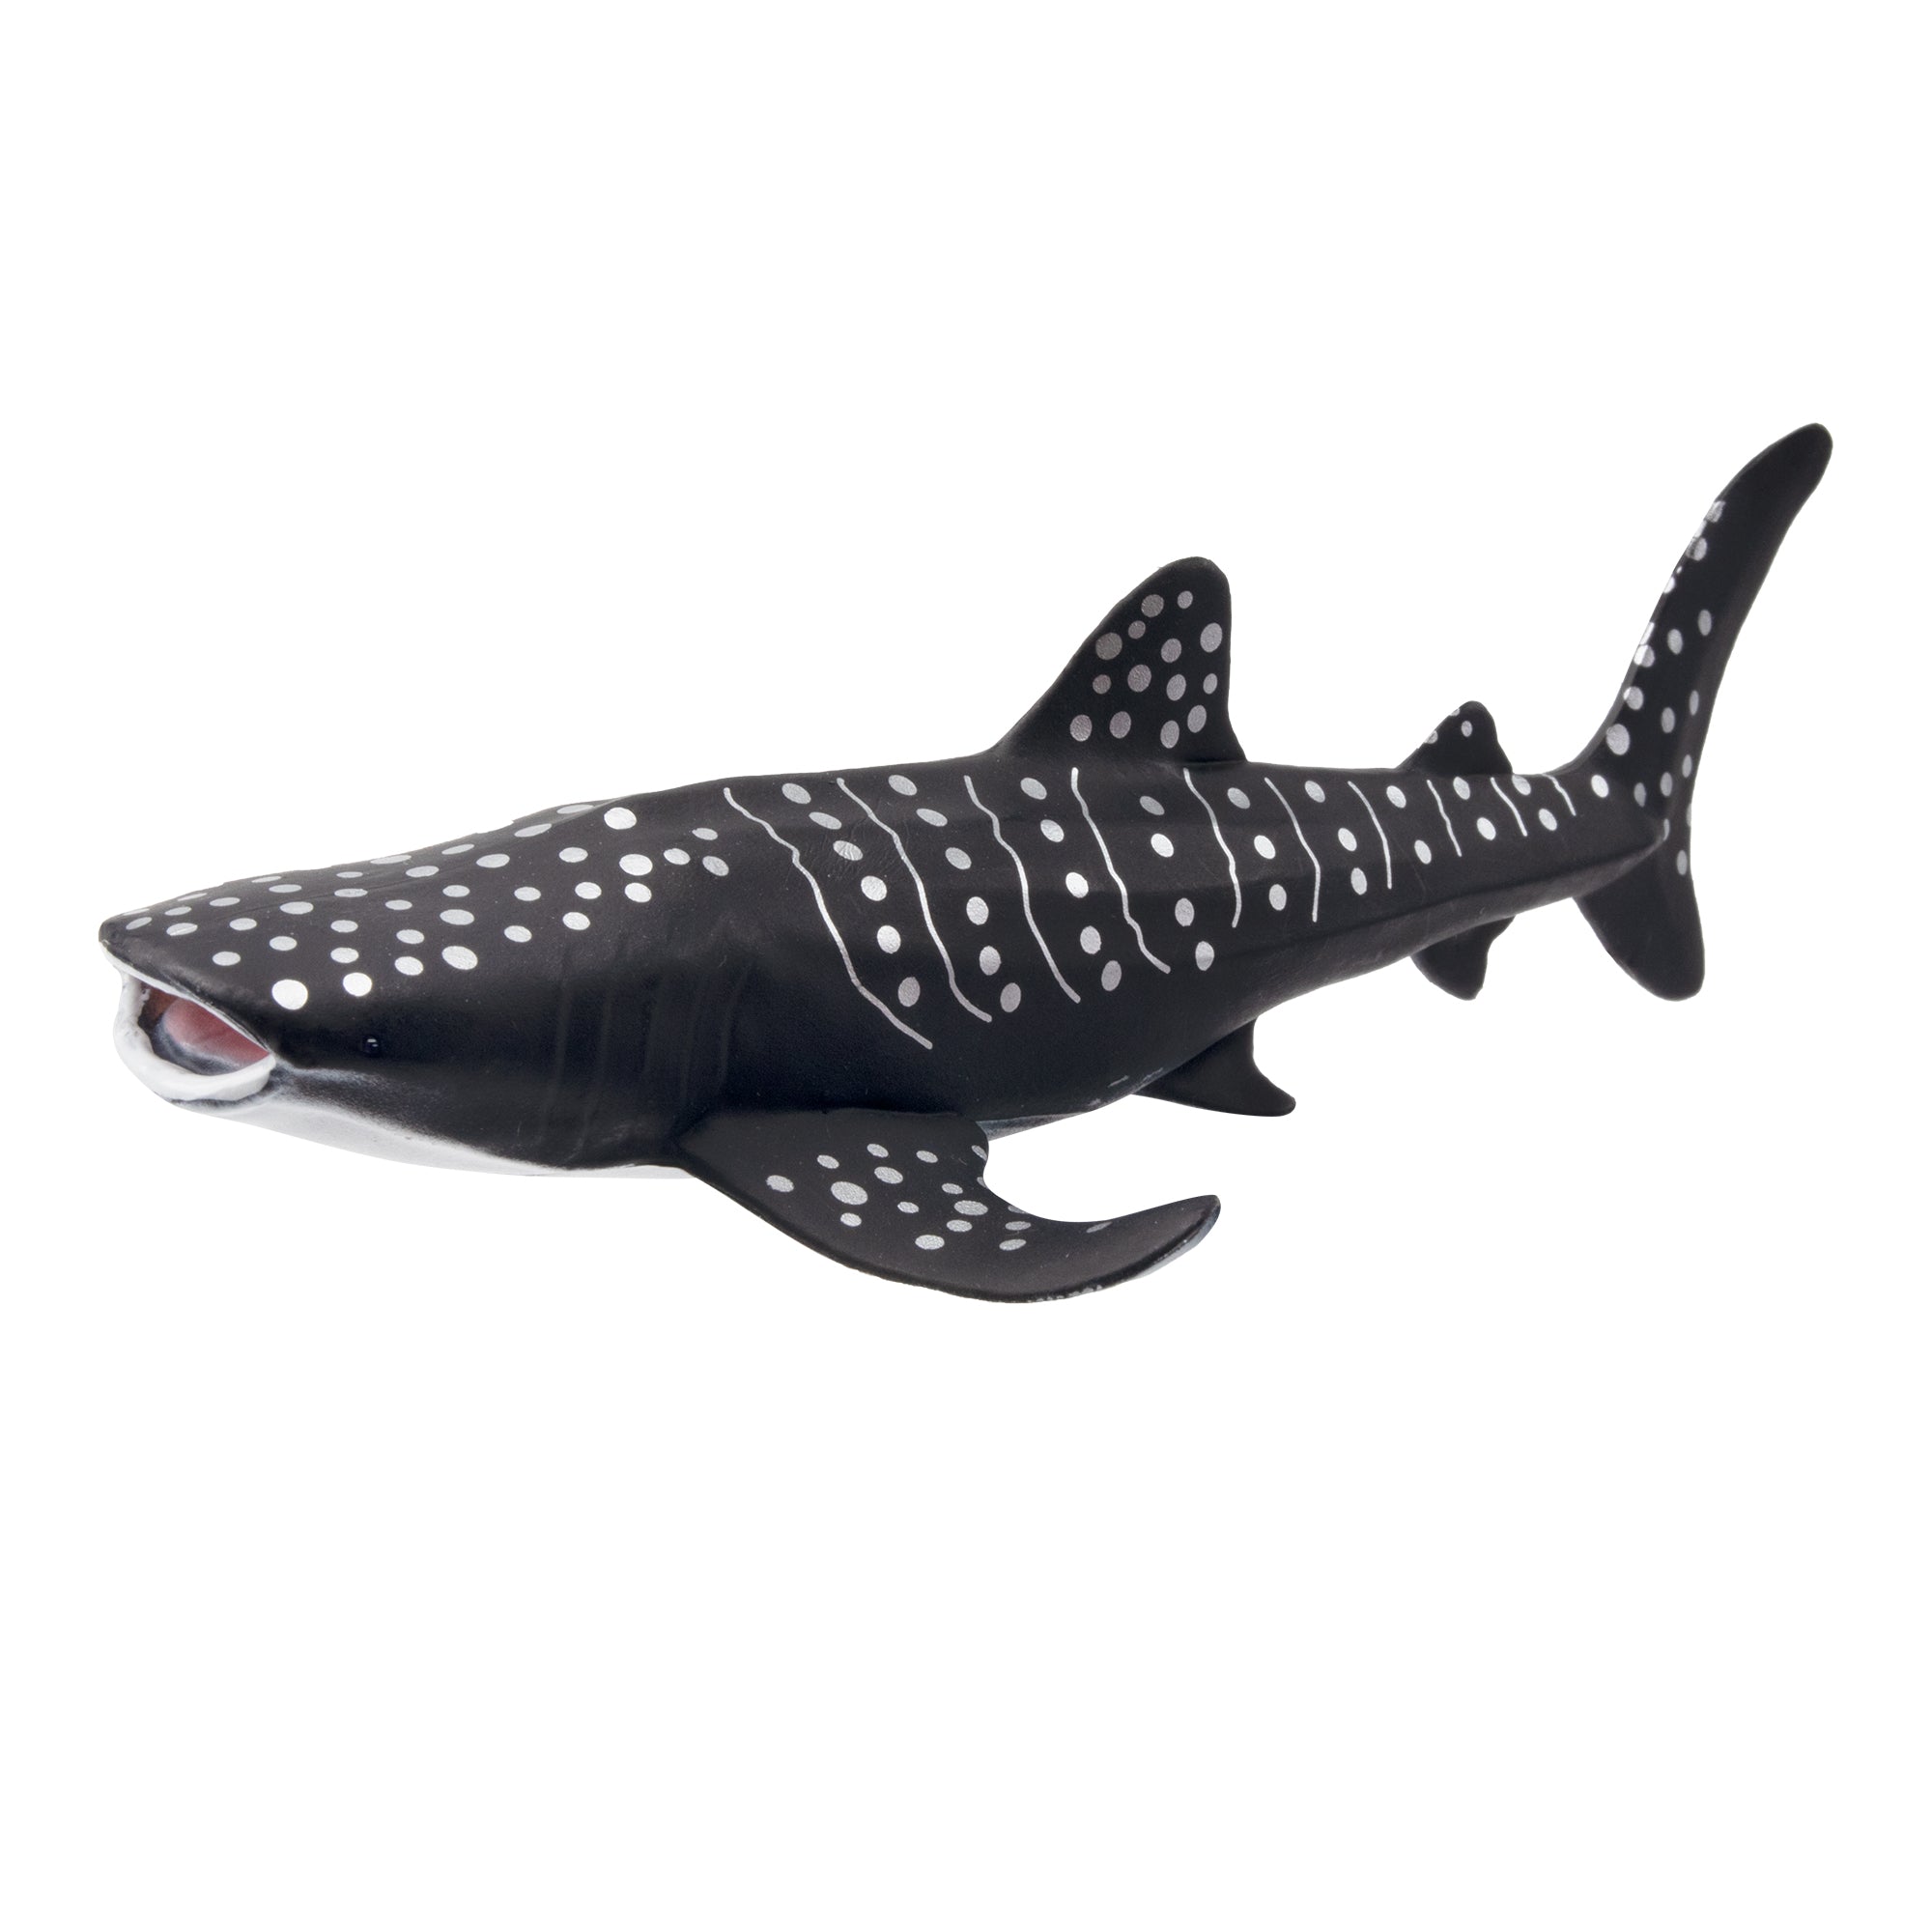 Toymany Whale Shark Figurine Toy